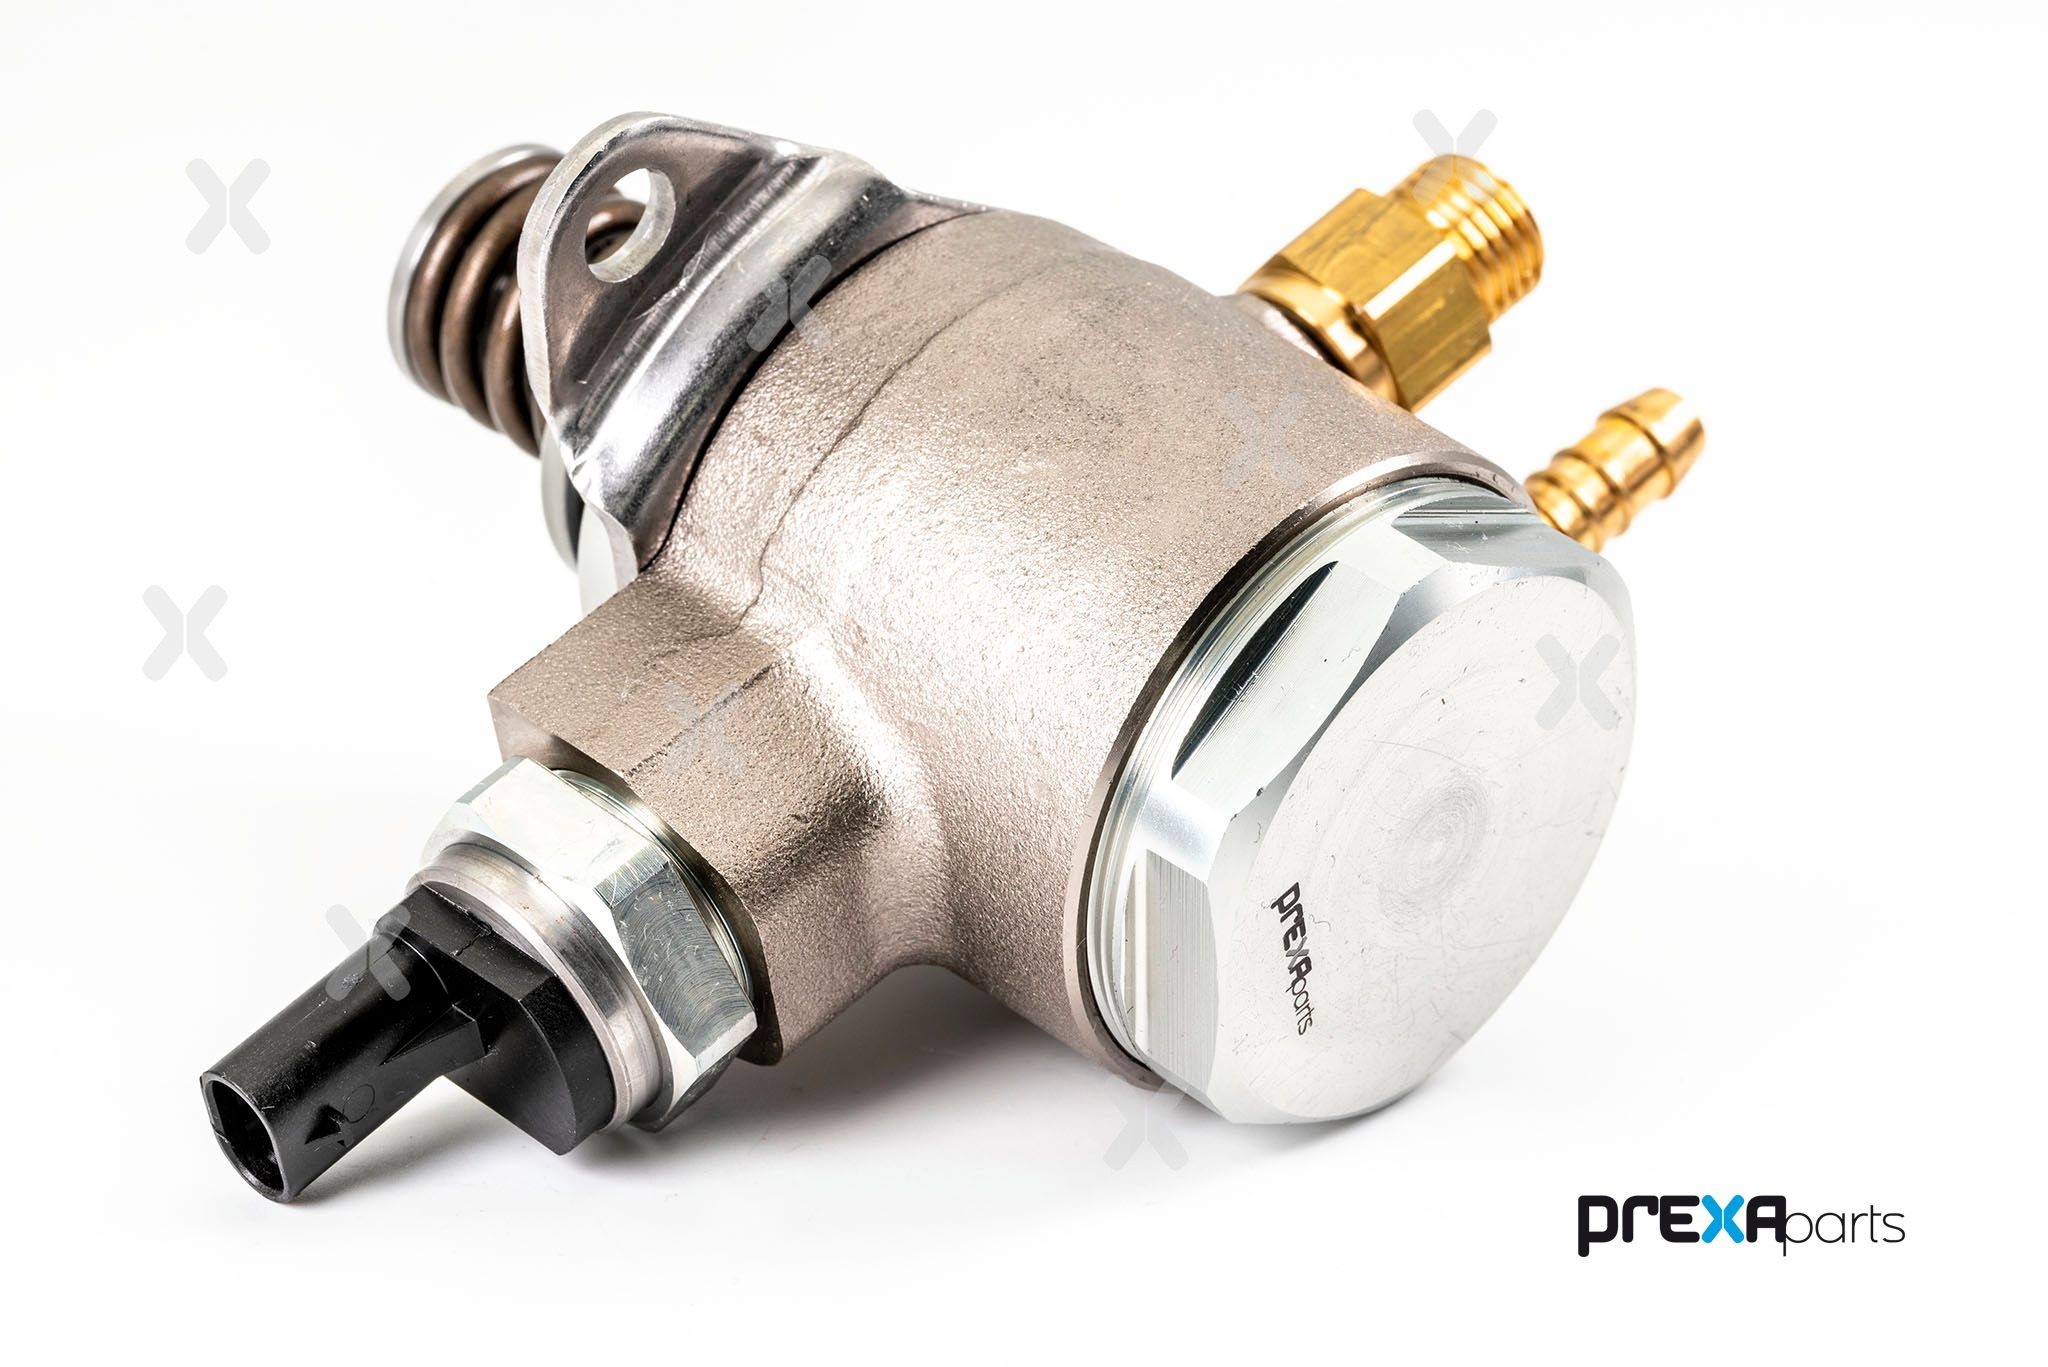 PREXAparts P118004 High pressure fuel pump